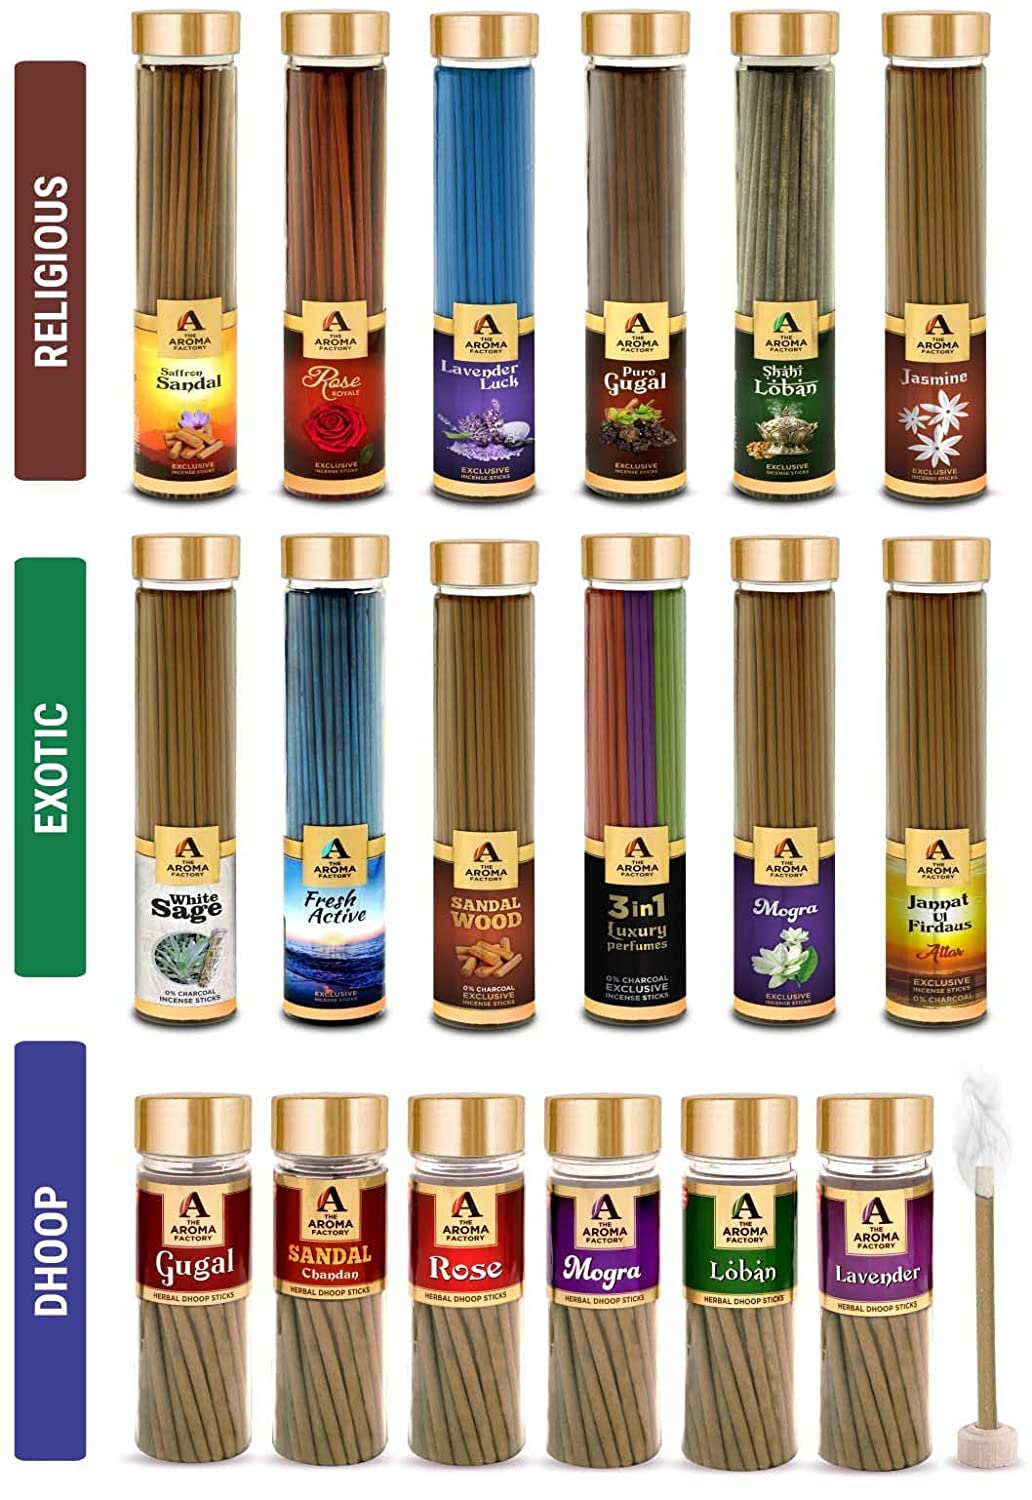 The Aroma Factory Devotion Giftpack( Kesar Chandan & White Sage Agarbatti, Mogra Dhoopbatti, Gugal Dhoop Cone, Kesar Chandan 30 Sticks) with Jute Bag No Charcoal, 100% Organic Incense (Devotion)